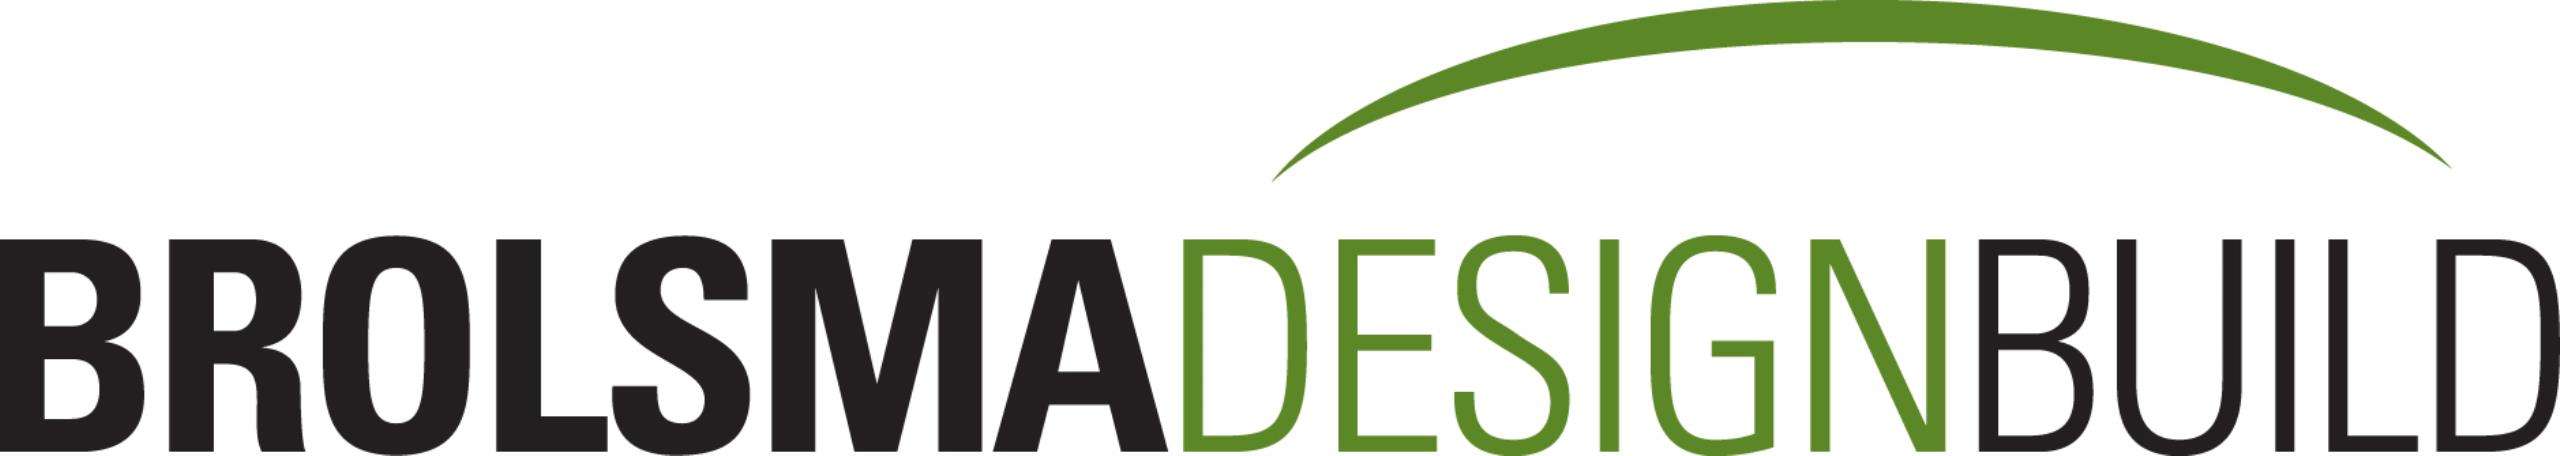 Brolsma Design/Build Inc Logo